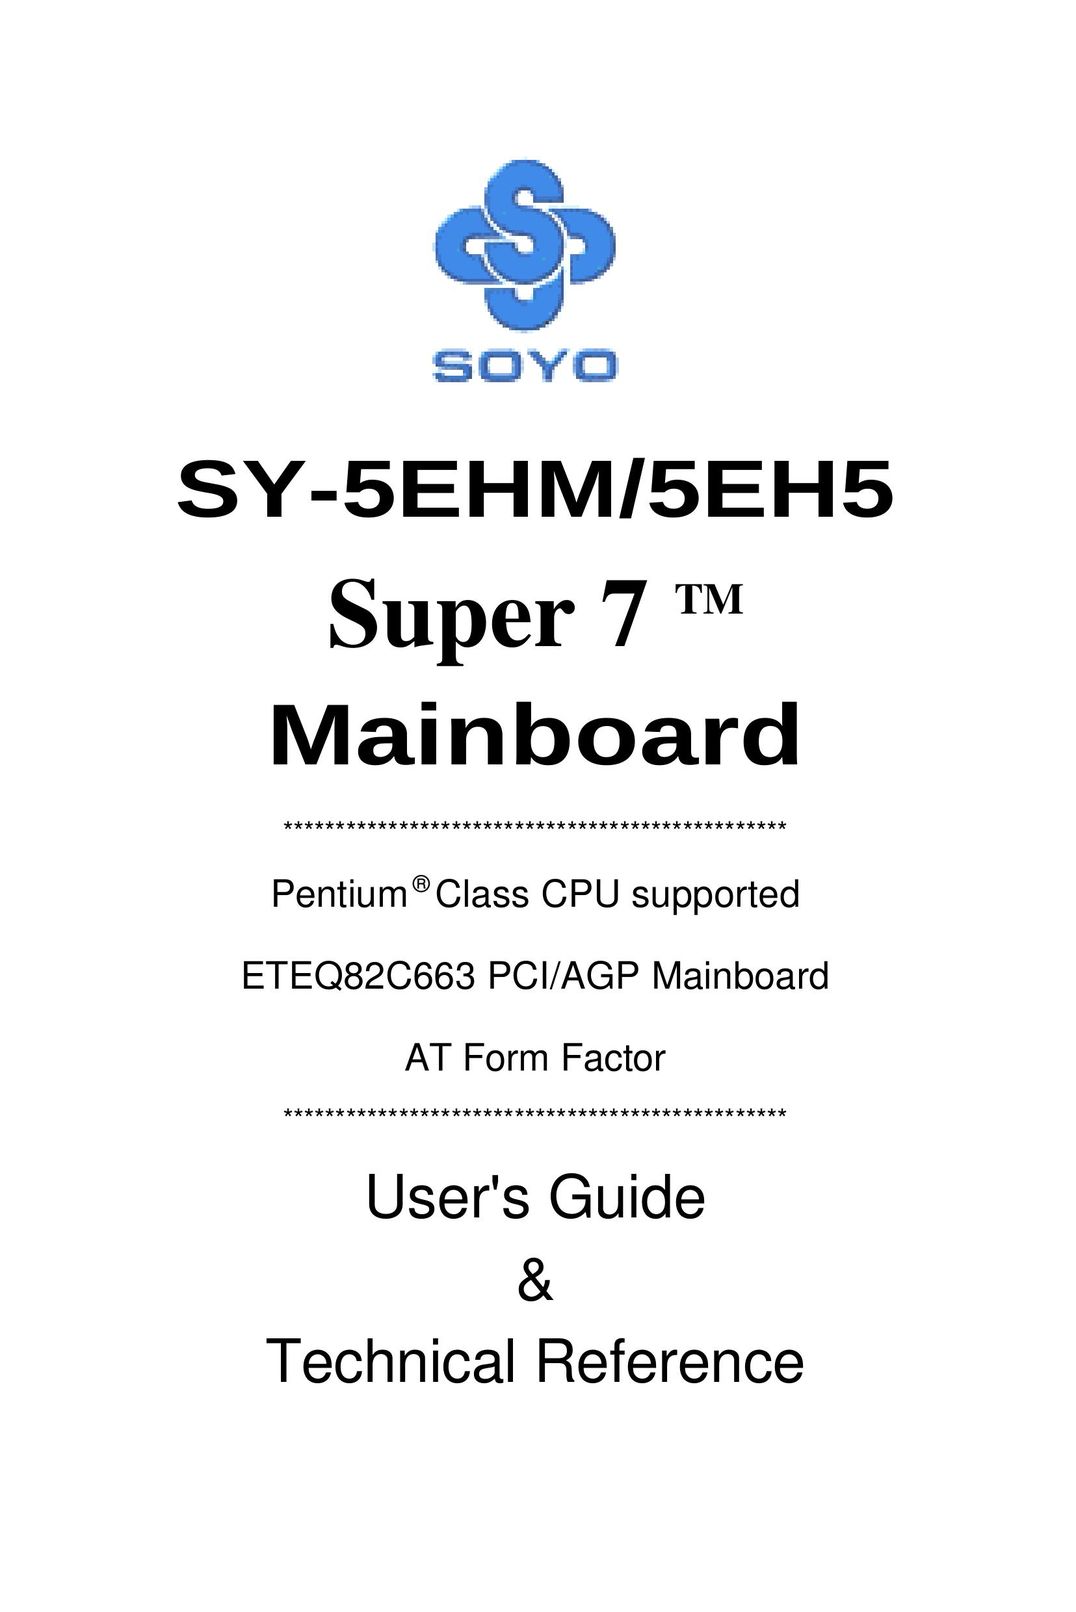 SOYO Super 7 Mainboard Computer Hardware User Manual